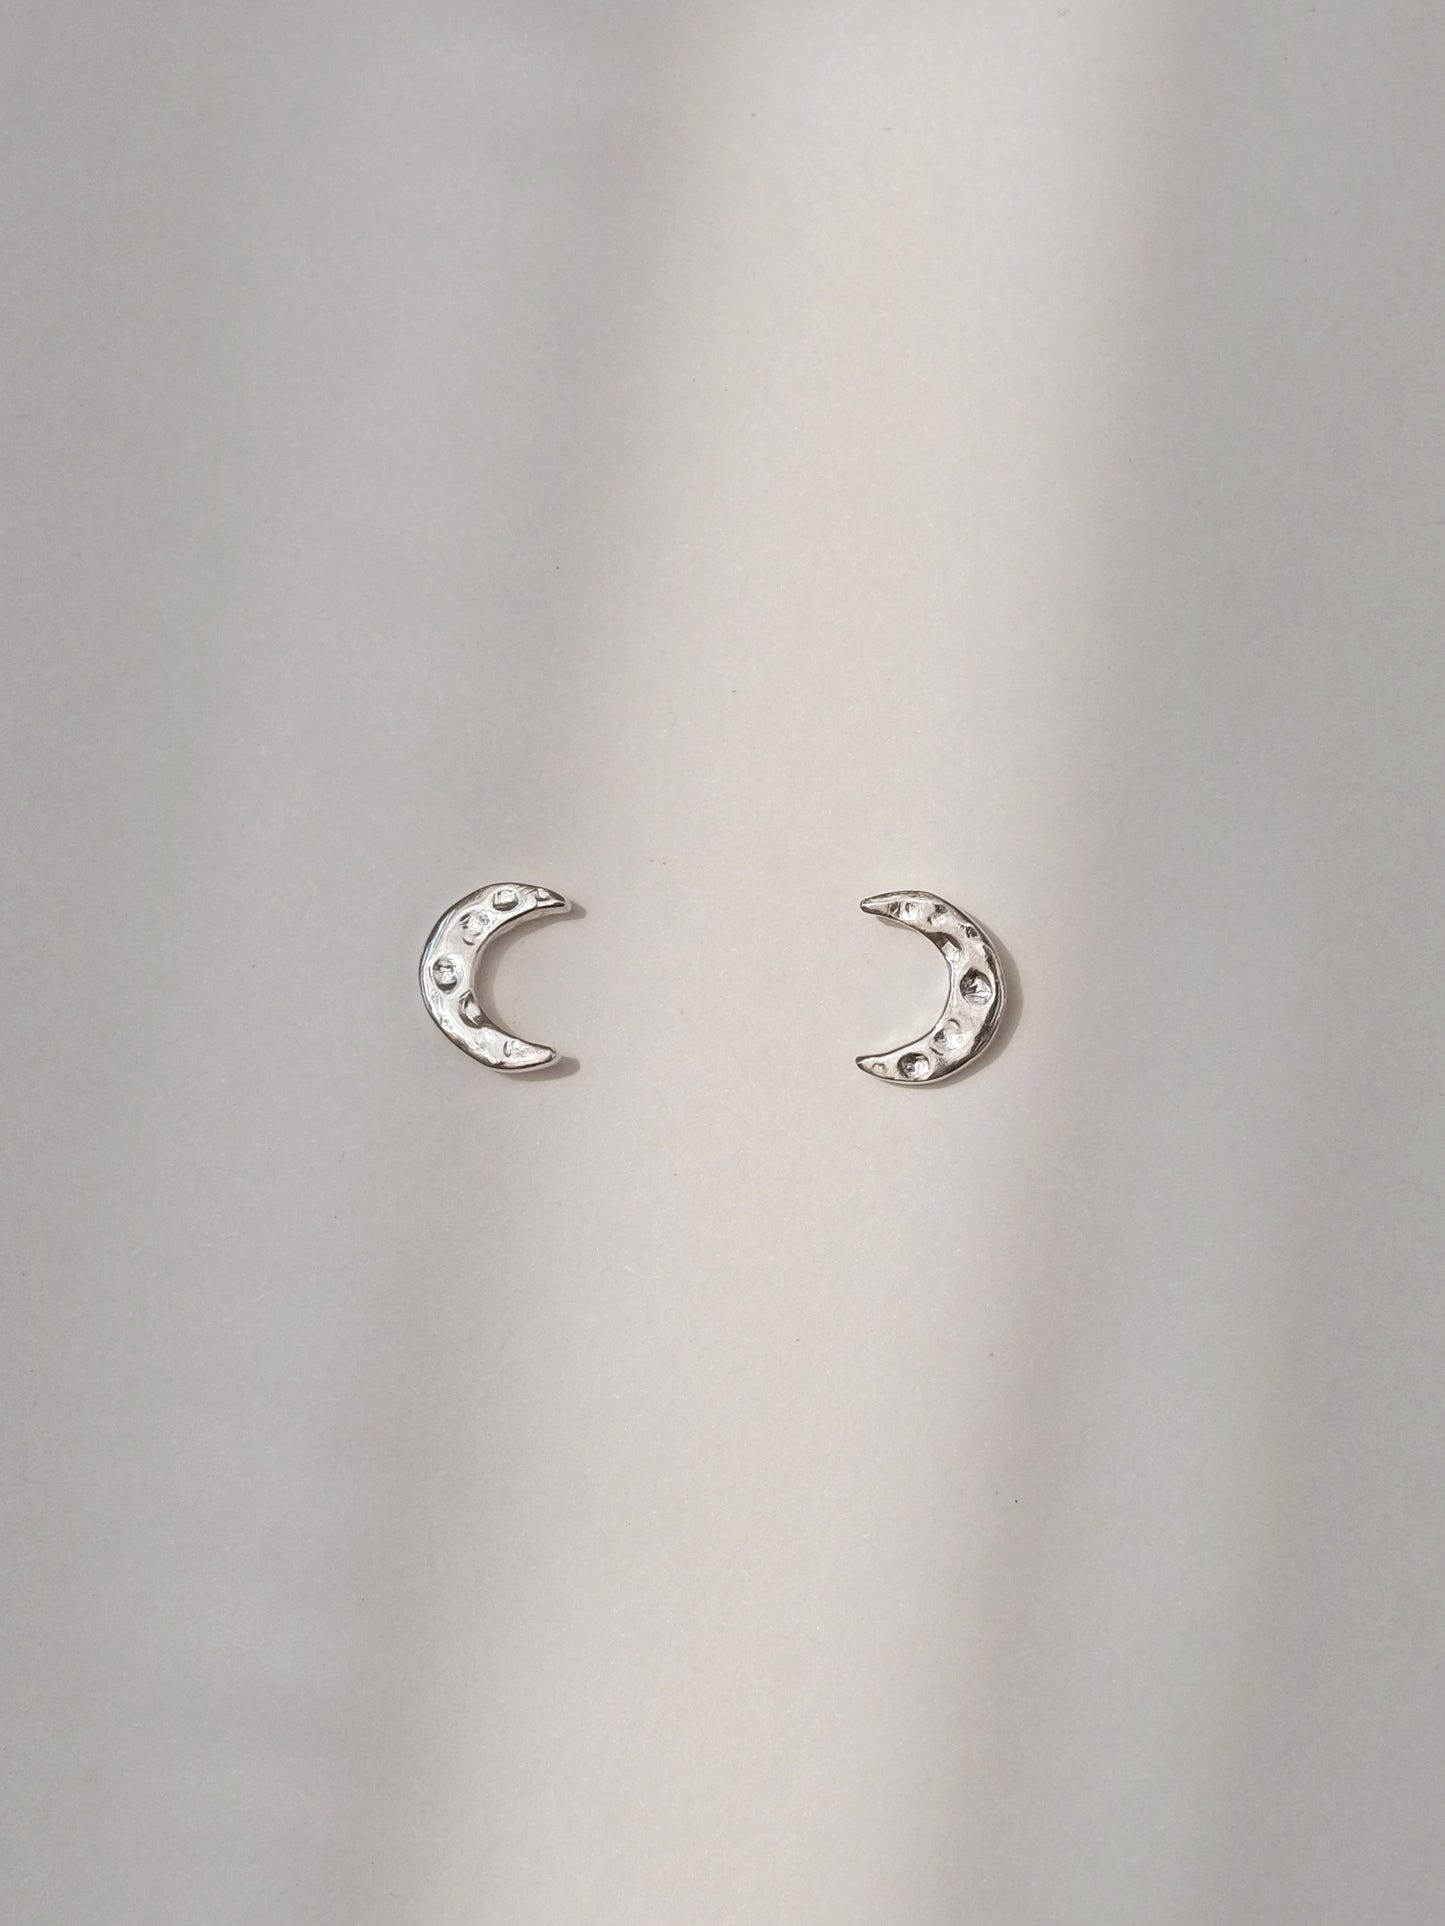 Earrings "Crescent"